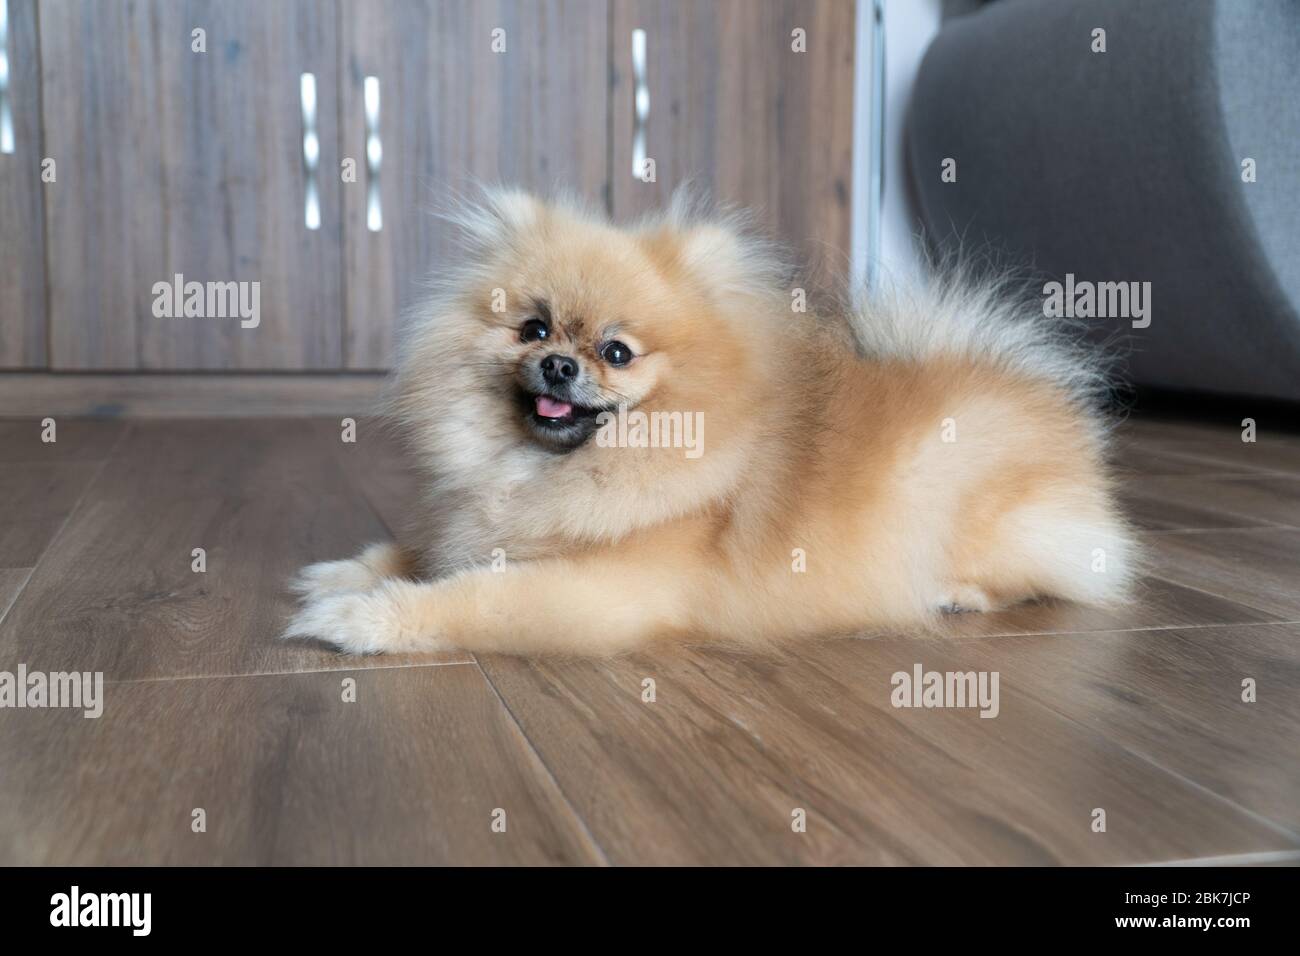 Pomeranian spitz puppy lies on the floor. Smiling pomeranian dog. Little fluffy Pomeranian puppy. Stock Photo